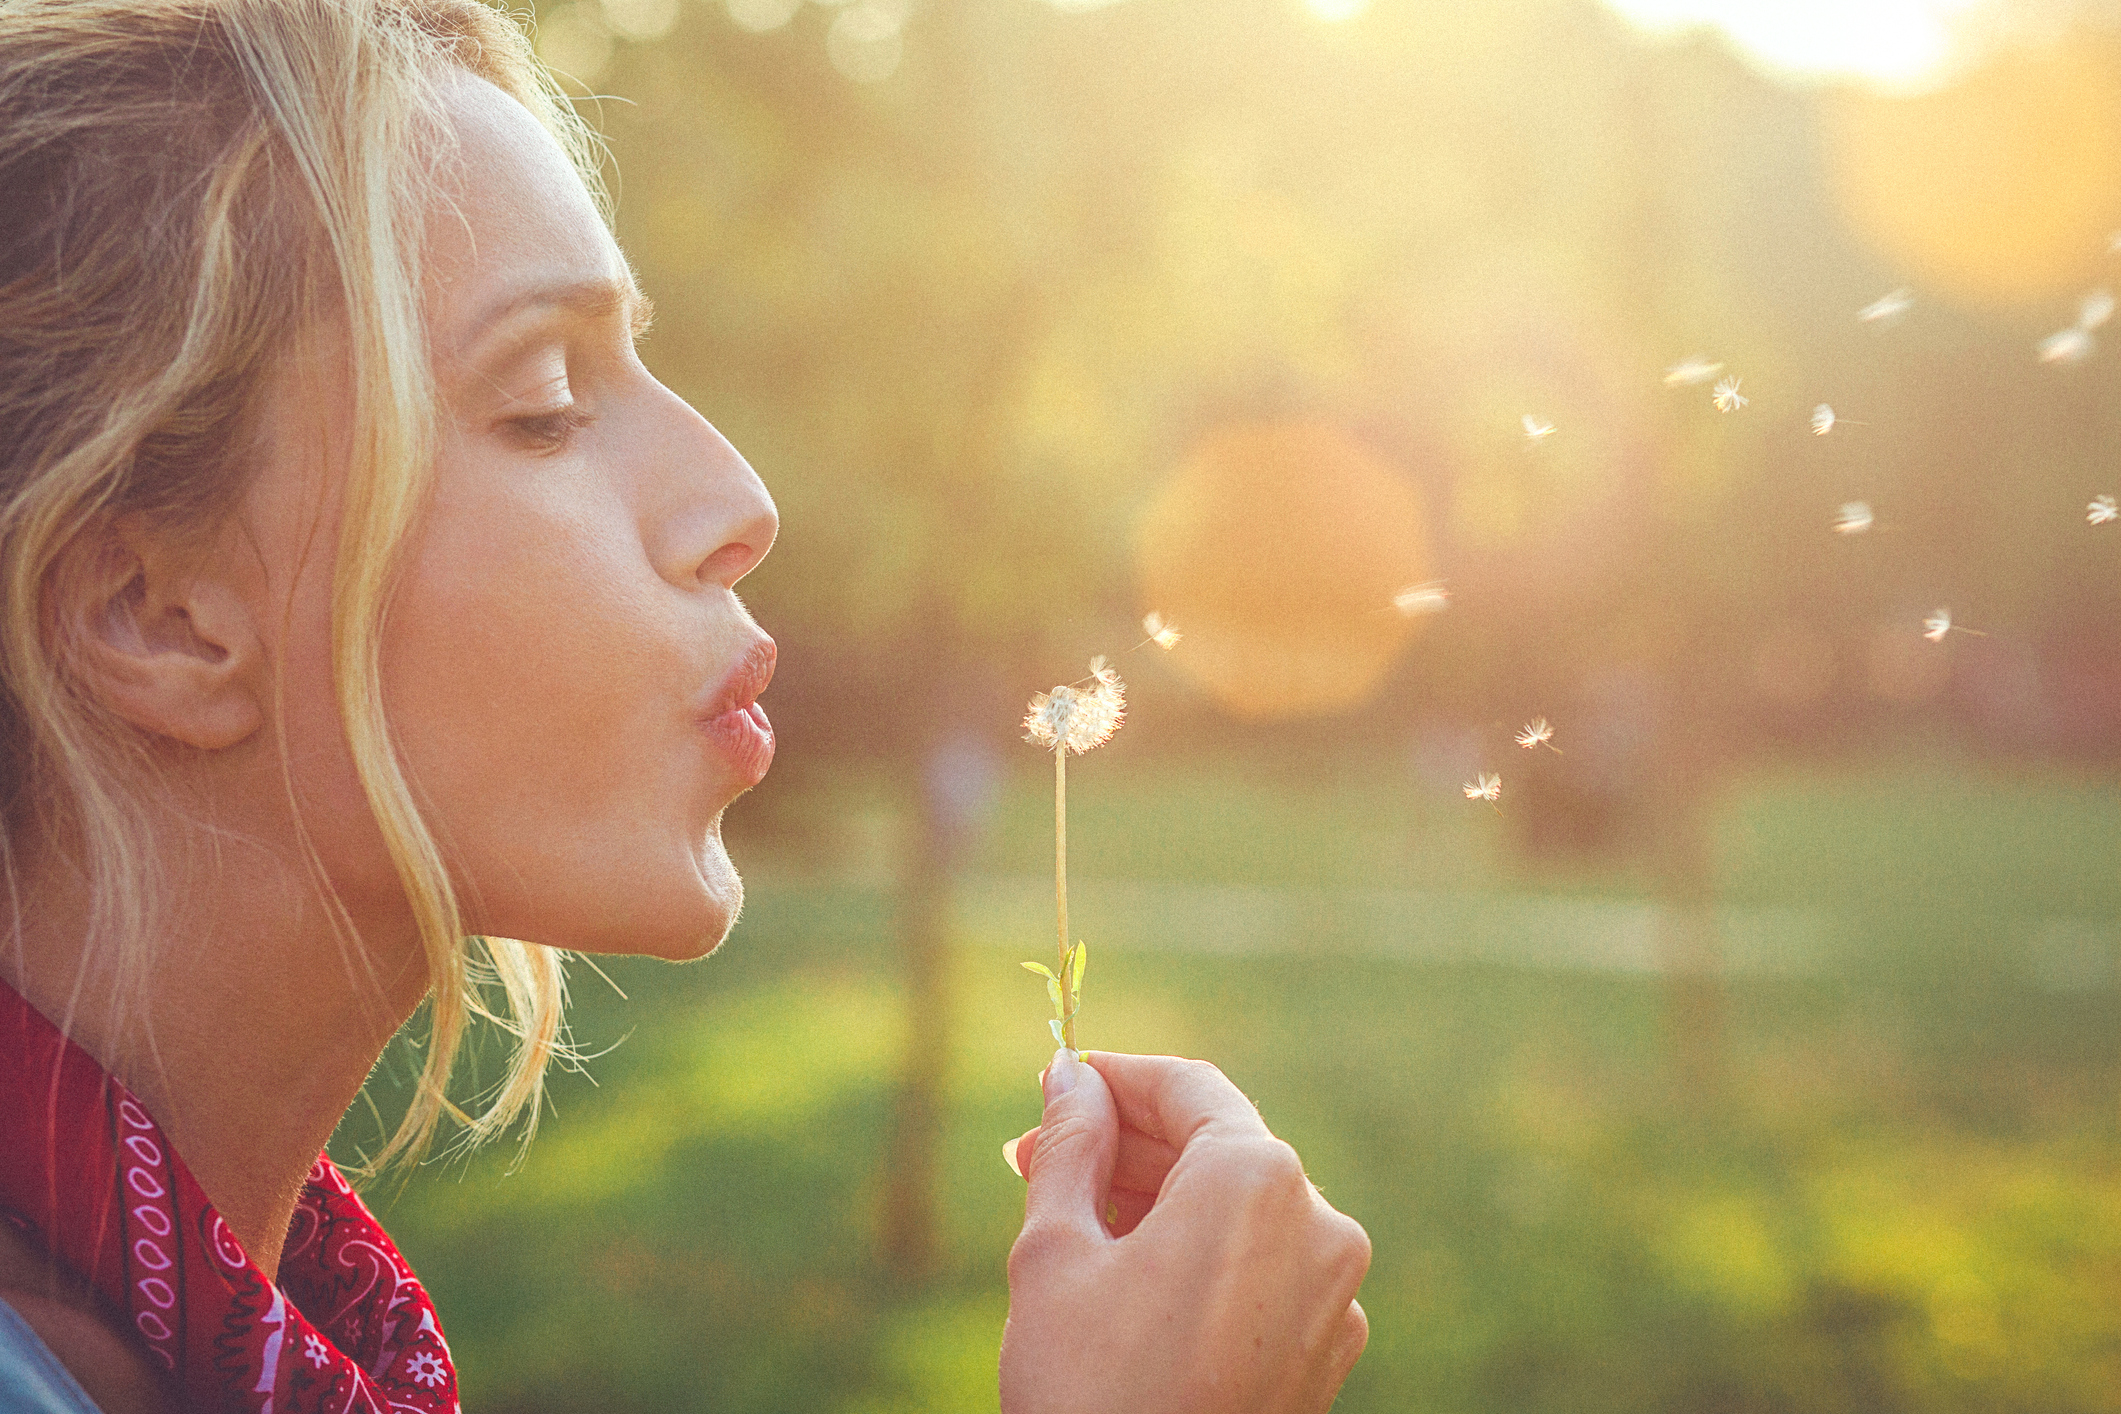 Woman blowing dandelion and enjoying fresh air